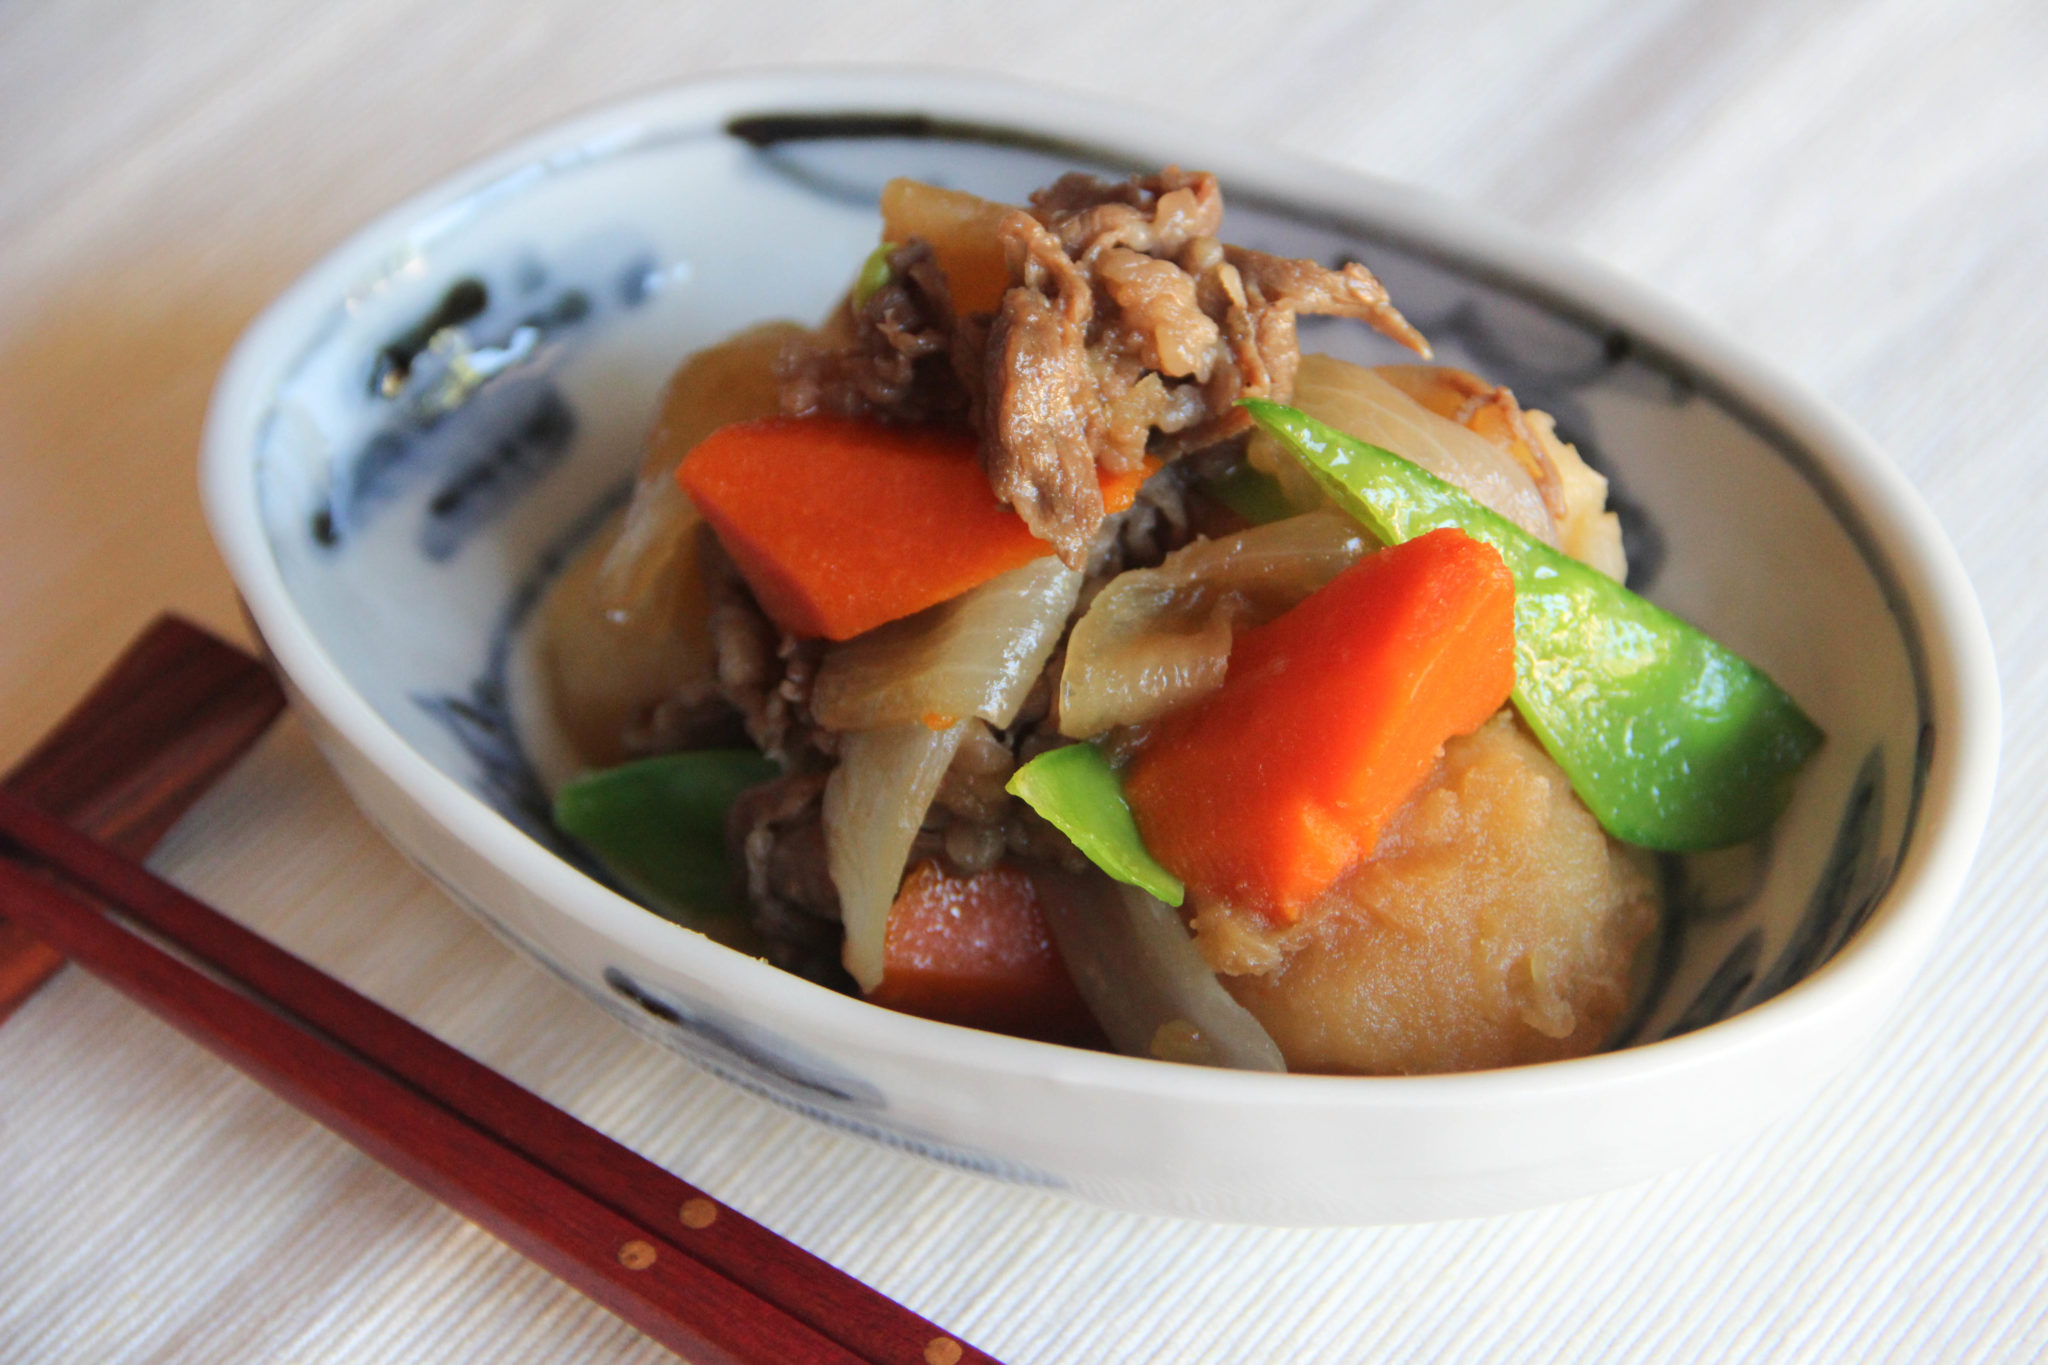 Nikujaga (meat and potato stew) Recipe